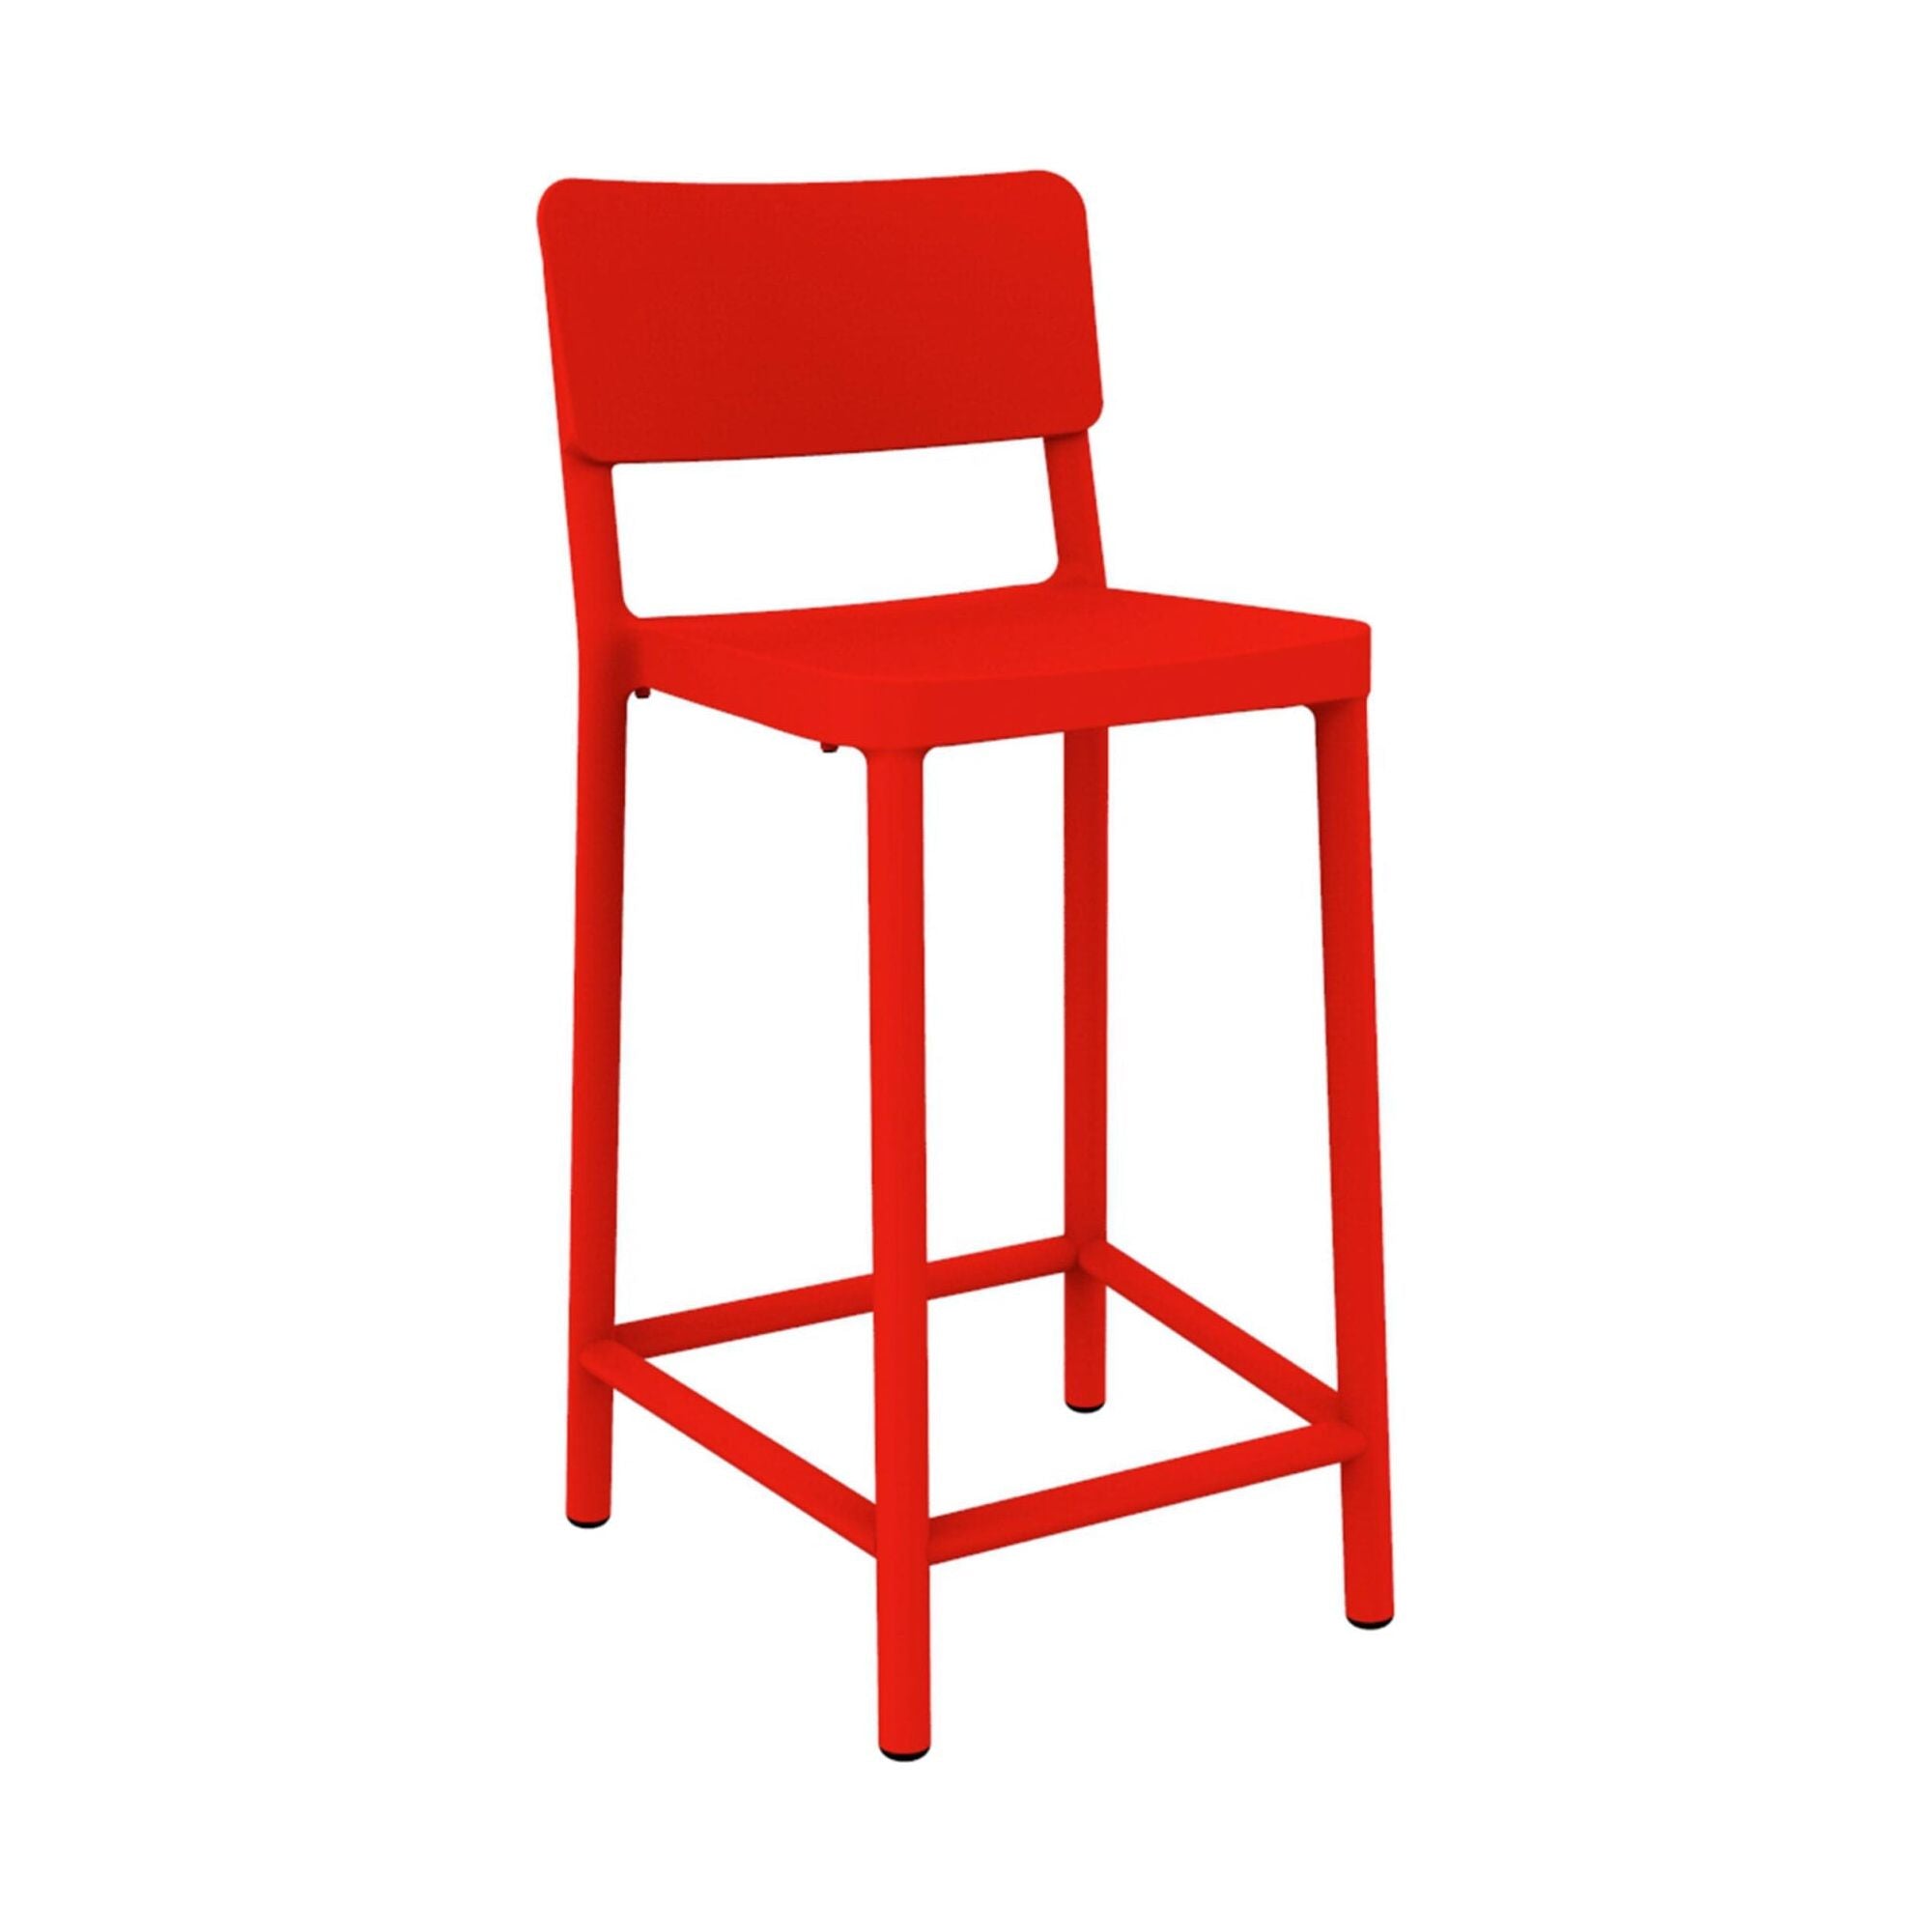 Resol lisboa medium stool inside, red outside